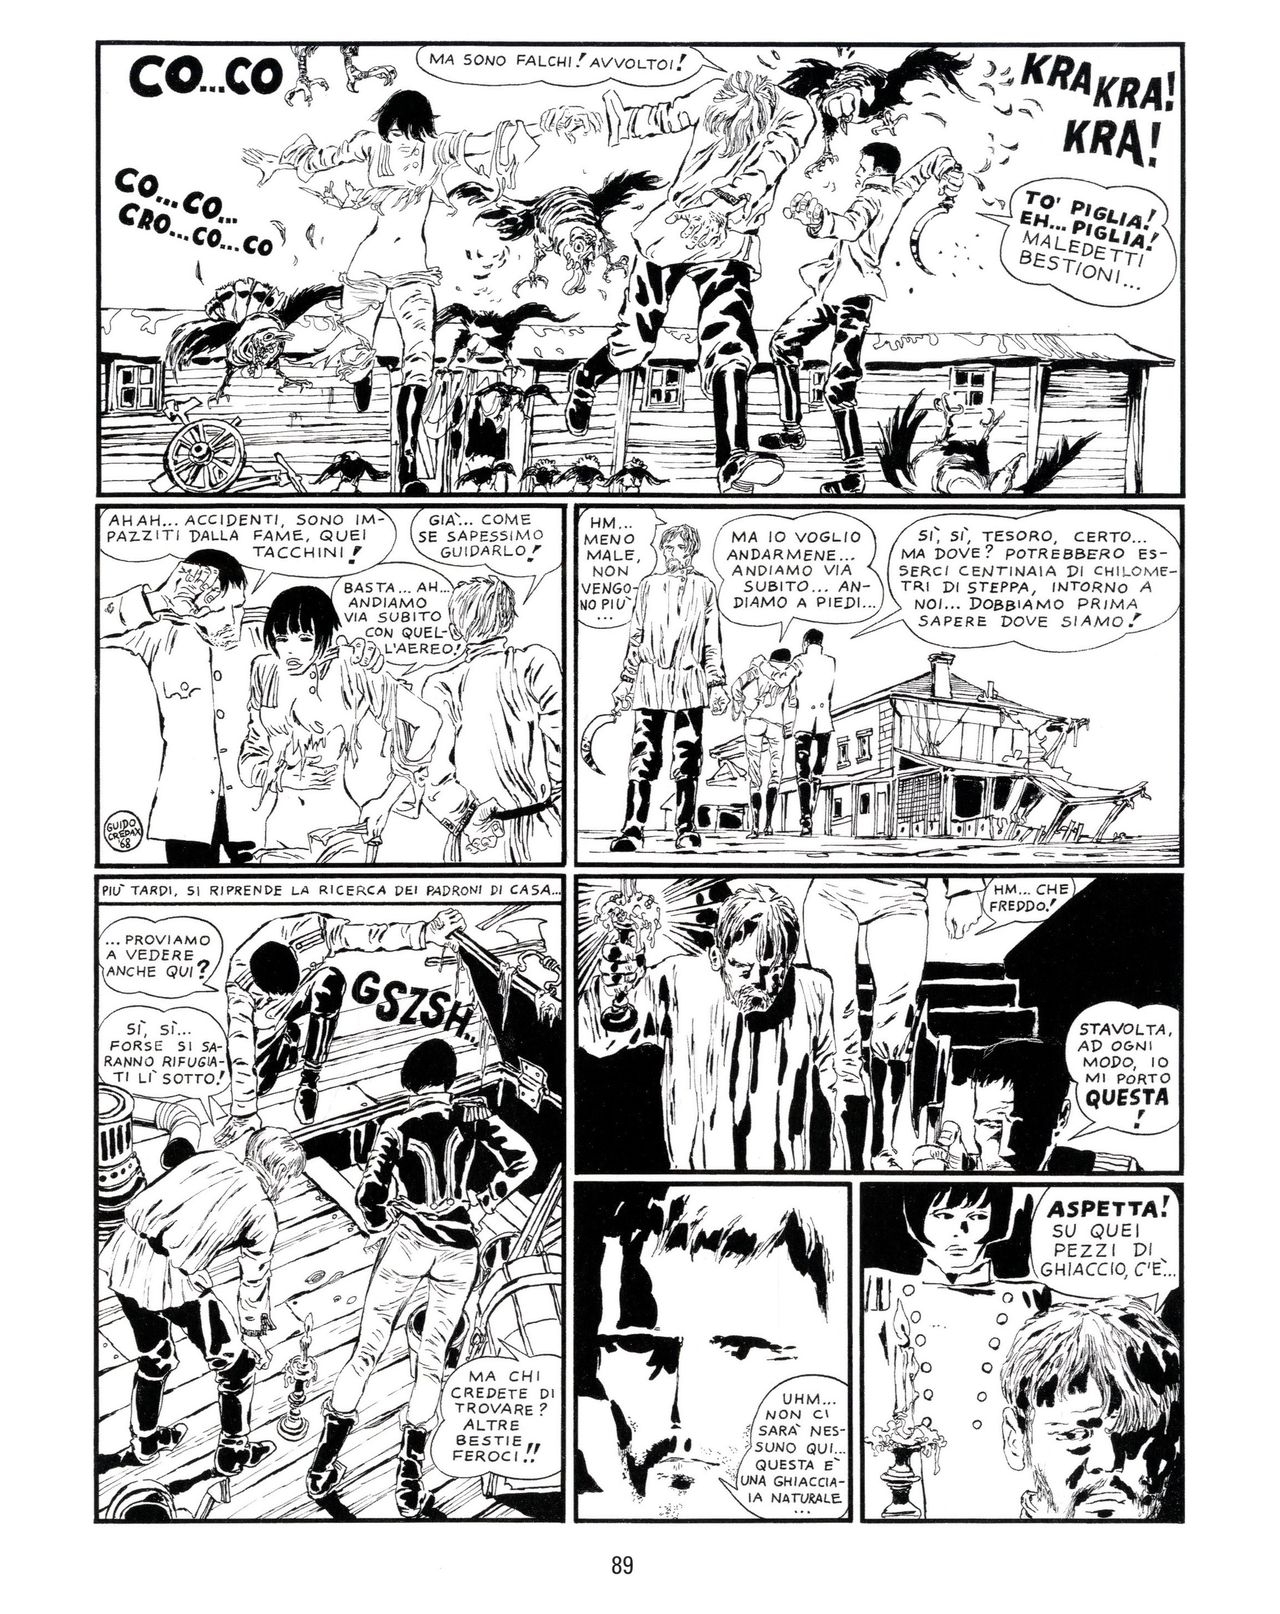 [Guido Crepax] Erotica Fumetti #25 : L'ascesa dei sotterranei : I cavalieri ciechi [Italian] 90